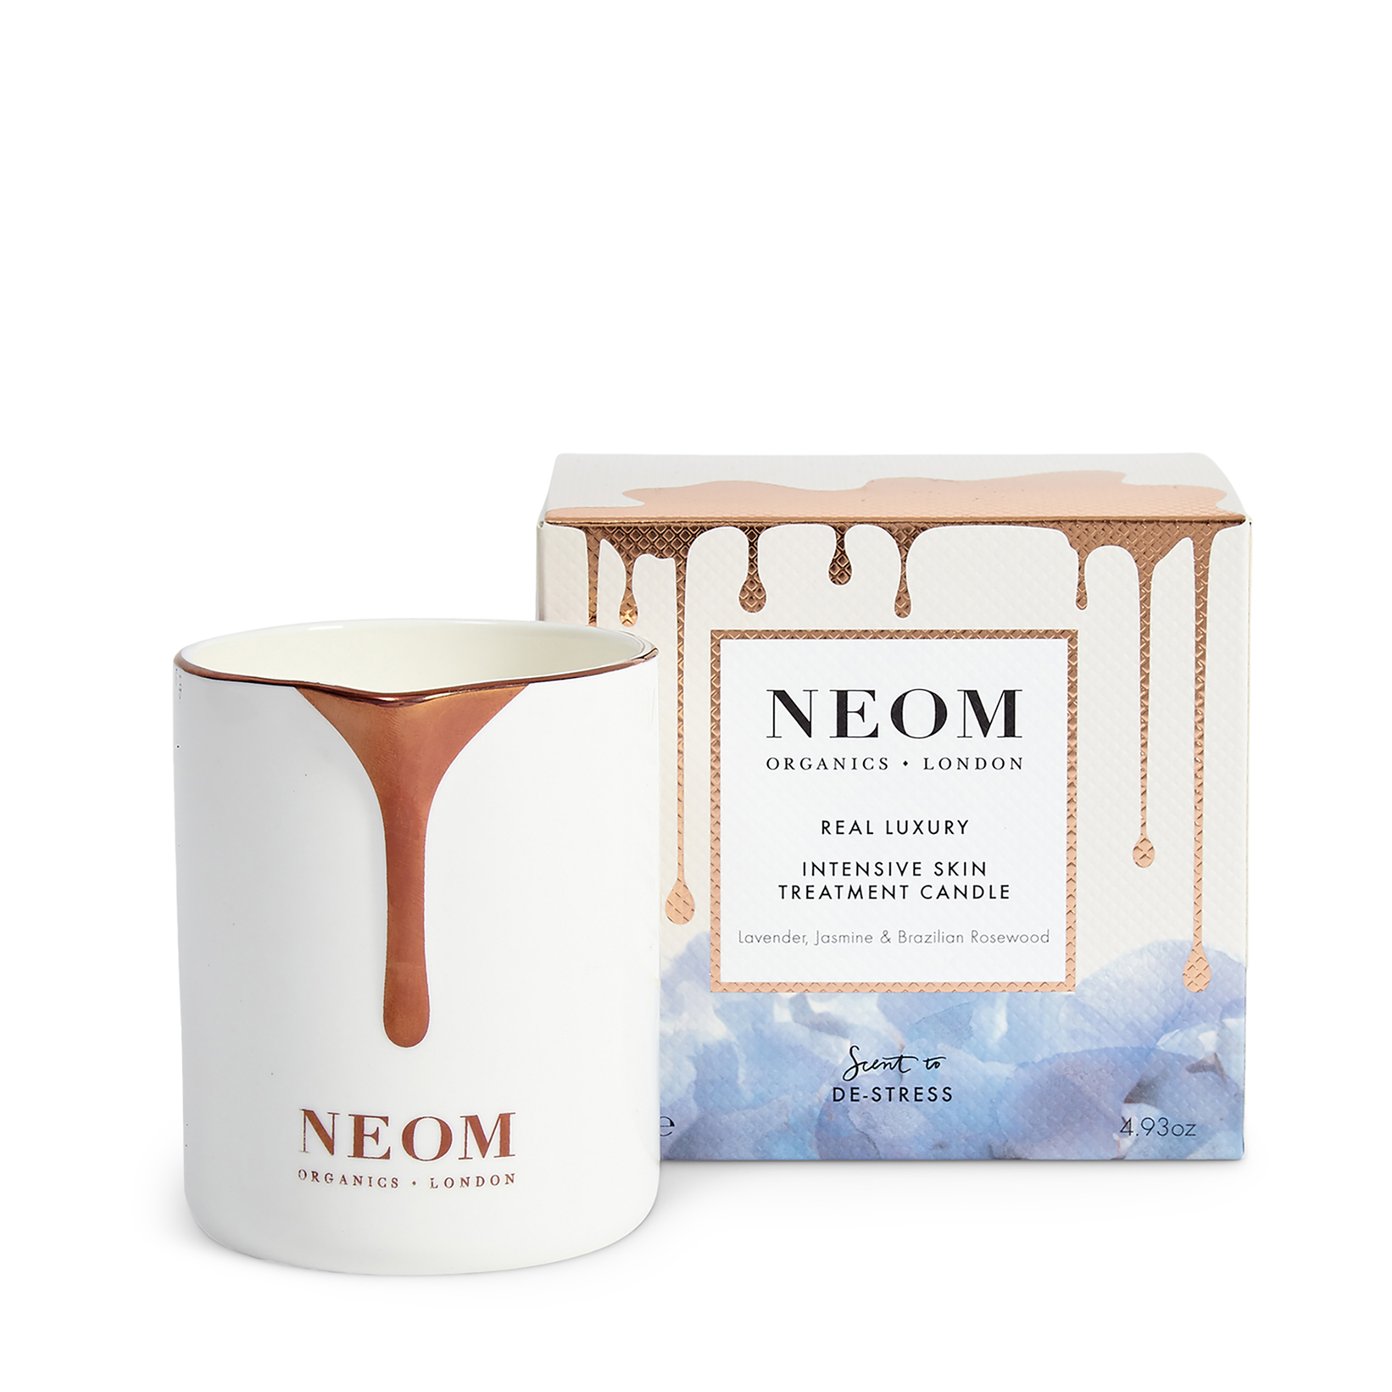 Neom Organics Real Luxury Intensive Skin Treatment Candle